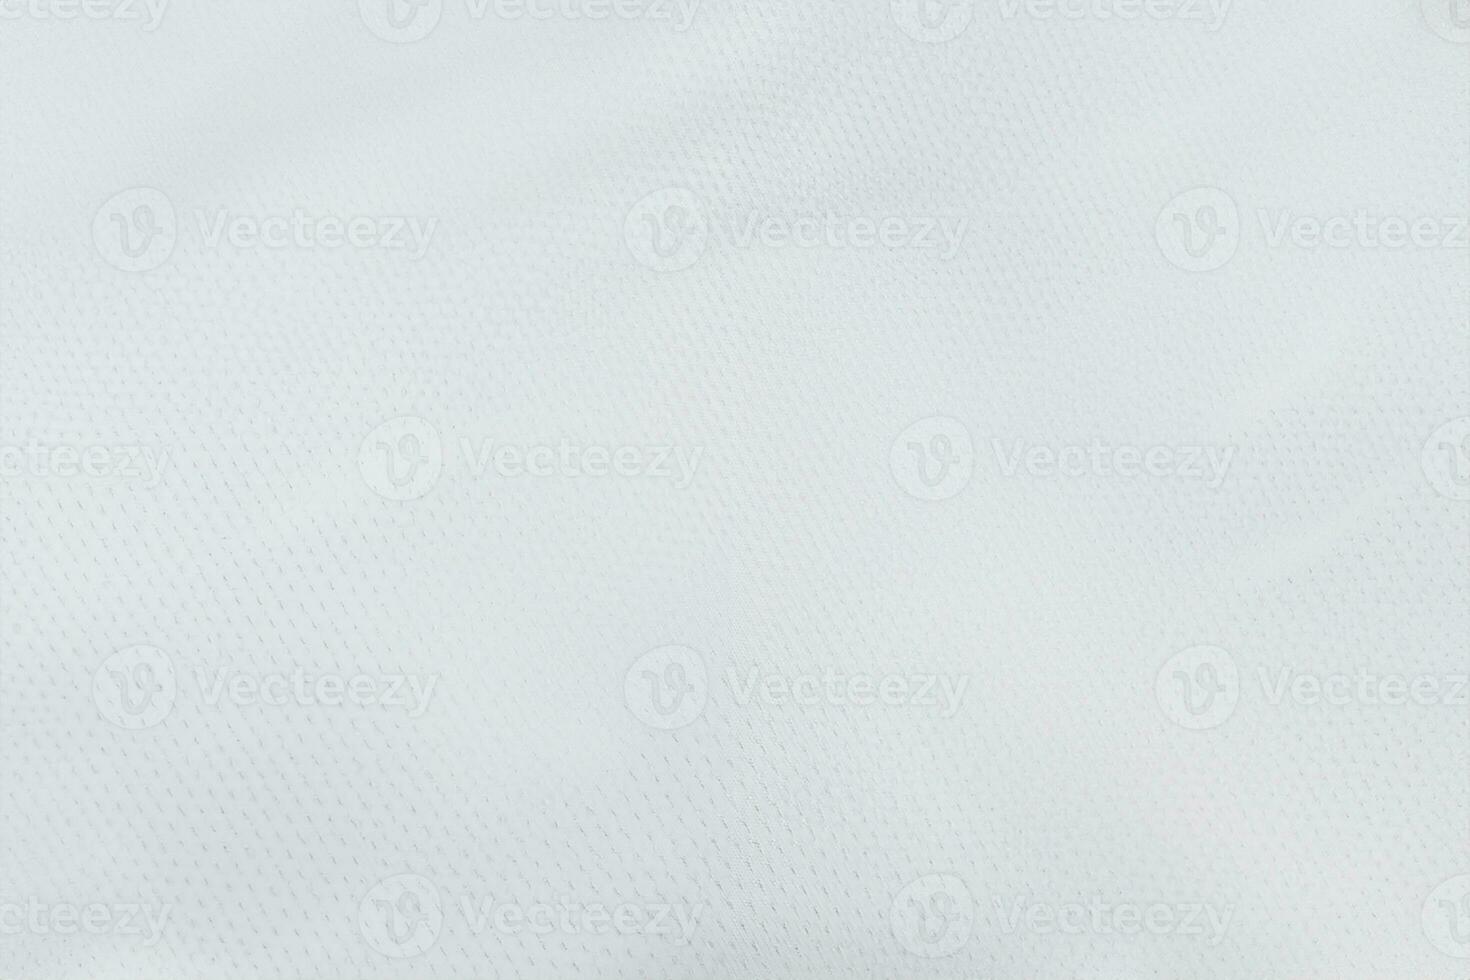 fondo de textura de tela blanca 2901749 Foto de stock en Vecteezy